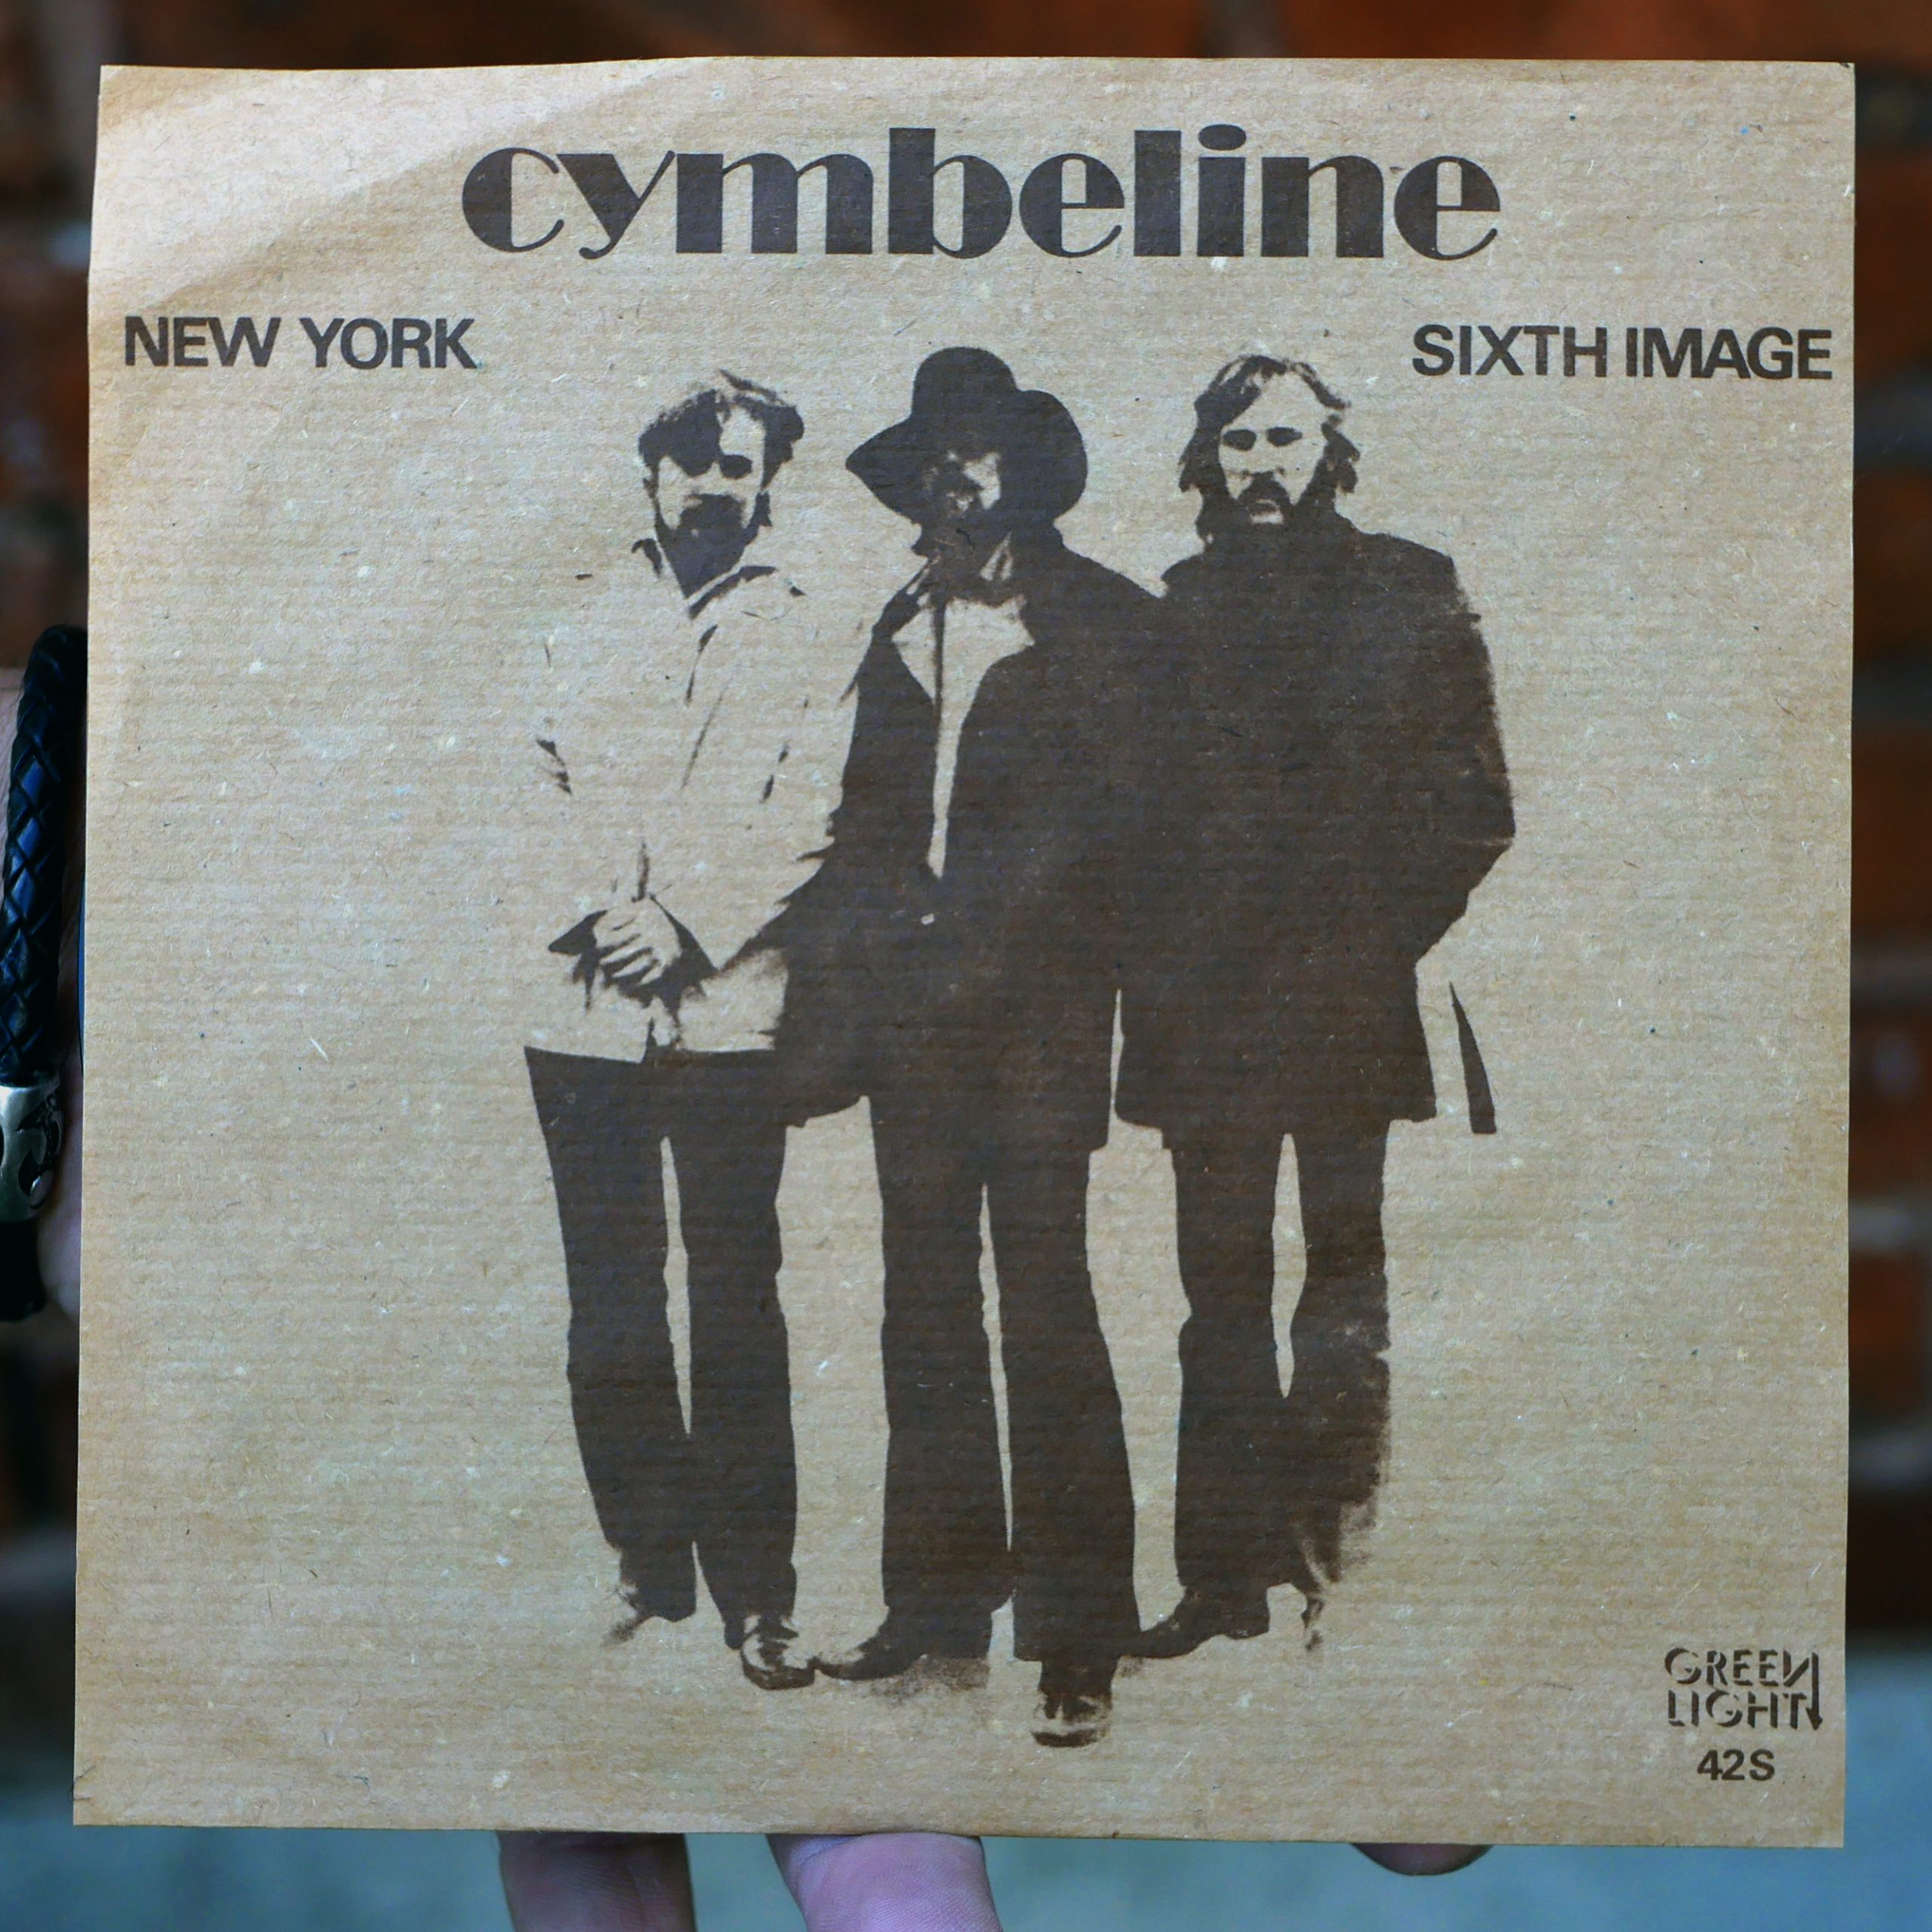 Cymbeline – New York/Sixth Image [7", 1971]